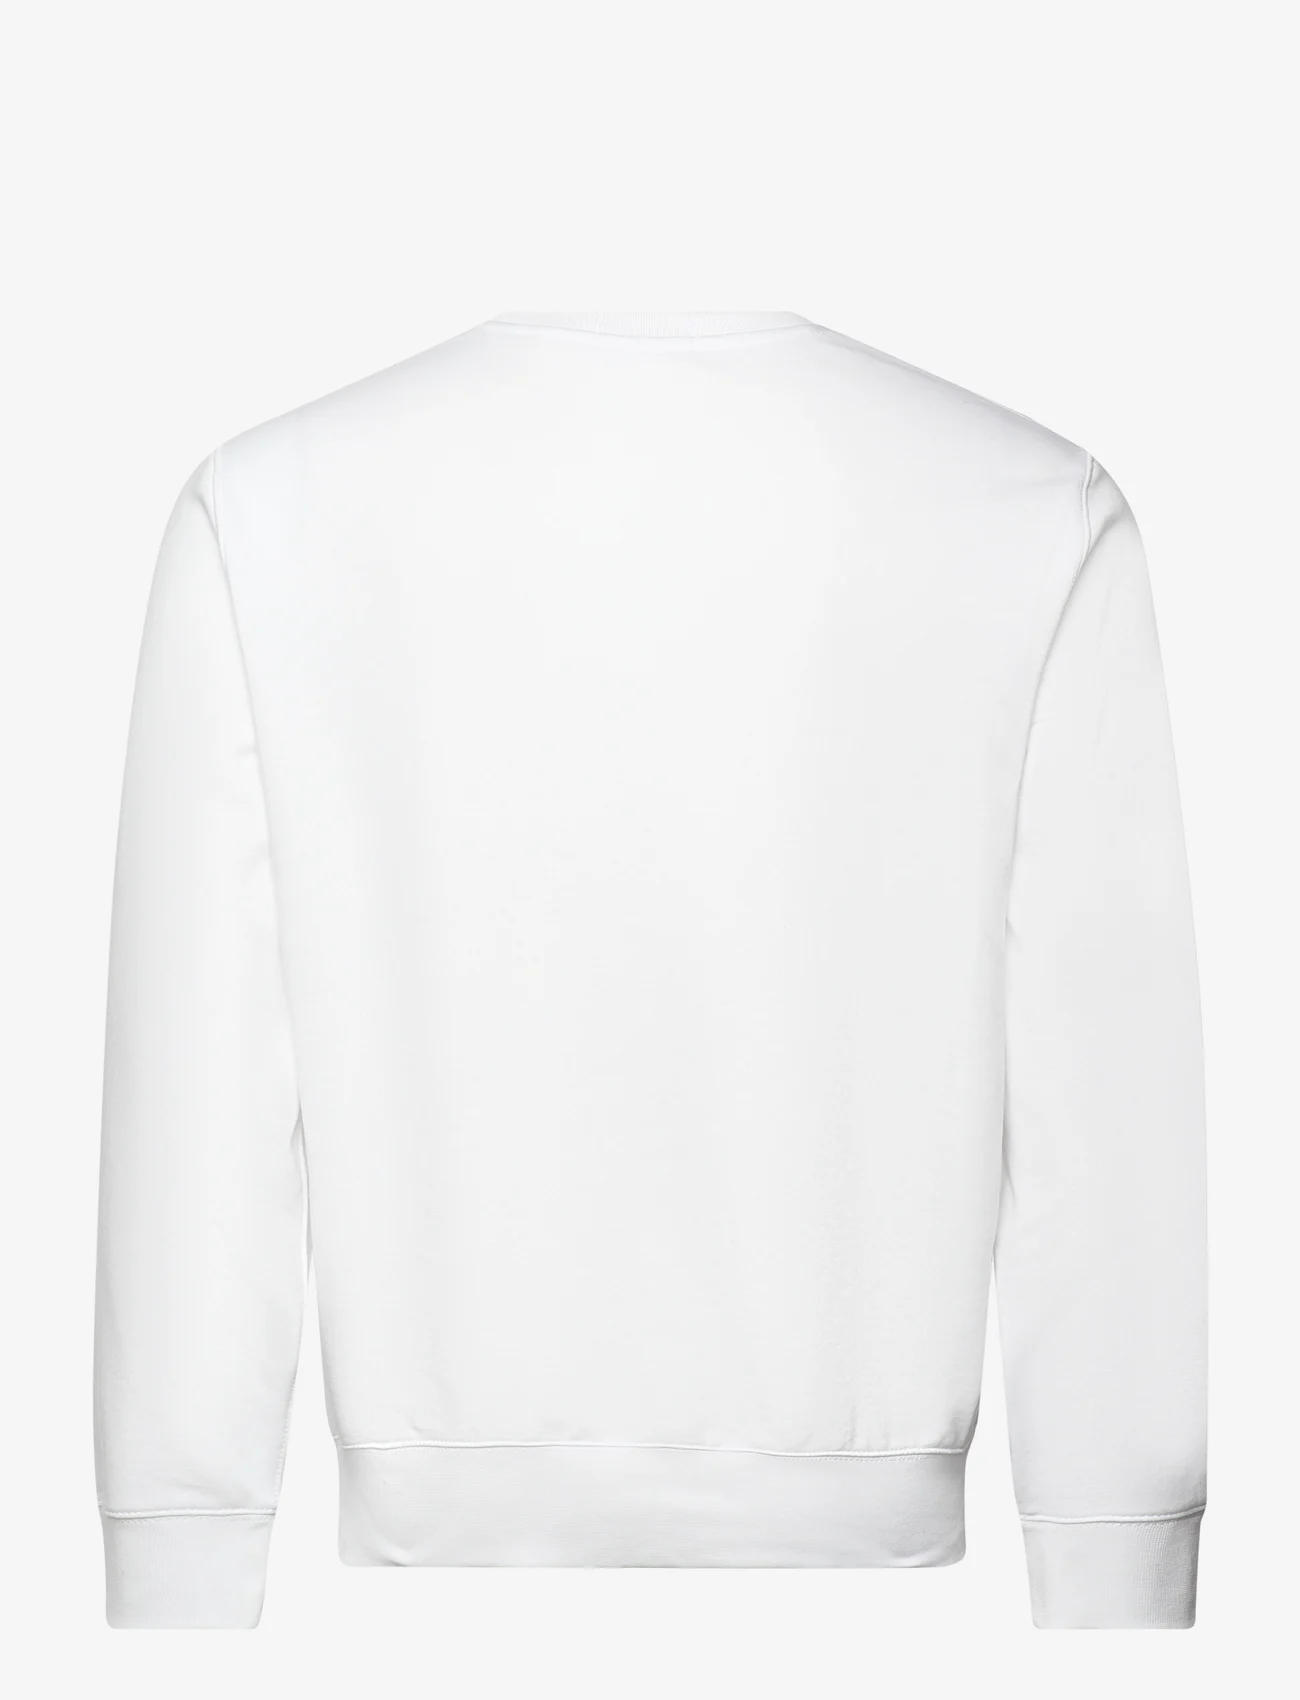 Polo Ralph Lauren - Polo Bear Fleece Sweatshirt - shoppa efter tillfälle - sp24 white beach - 1